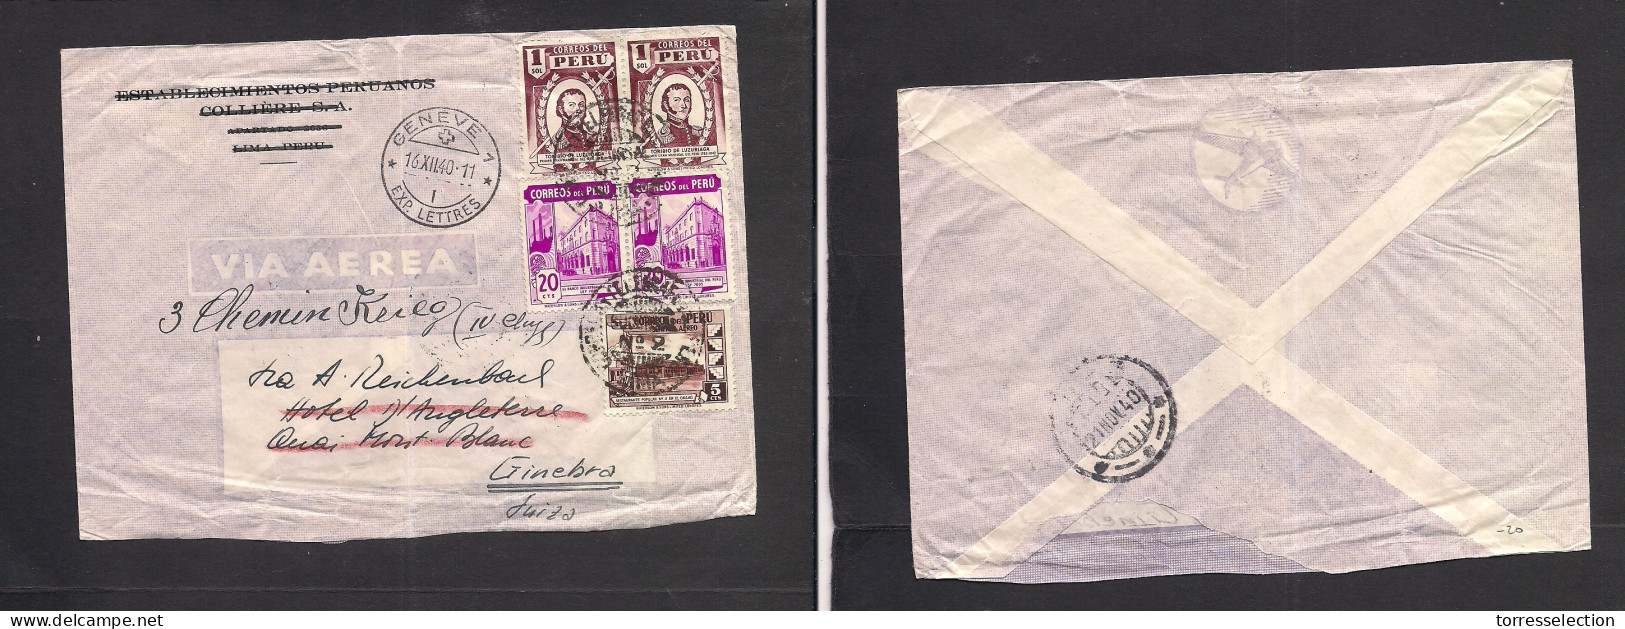 PERU. 1940. Lima Suc 2 - Switzerland, Geneva (16 Dec) Air Multifkd Envelope, Fwded 2,45 Soles Rate. - Peru